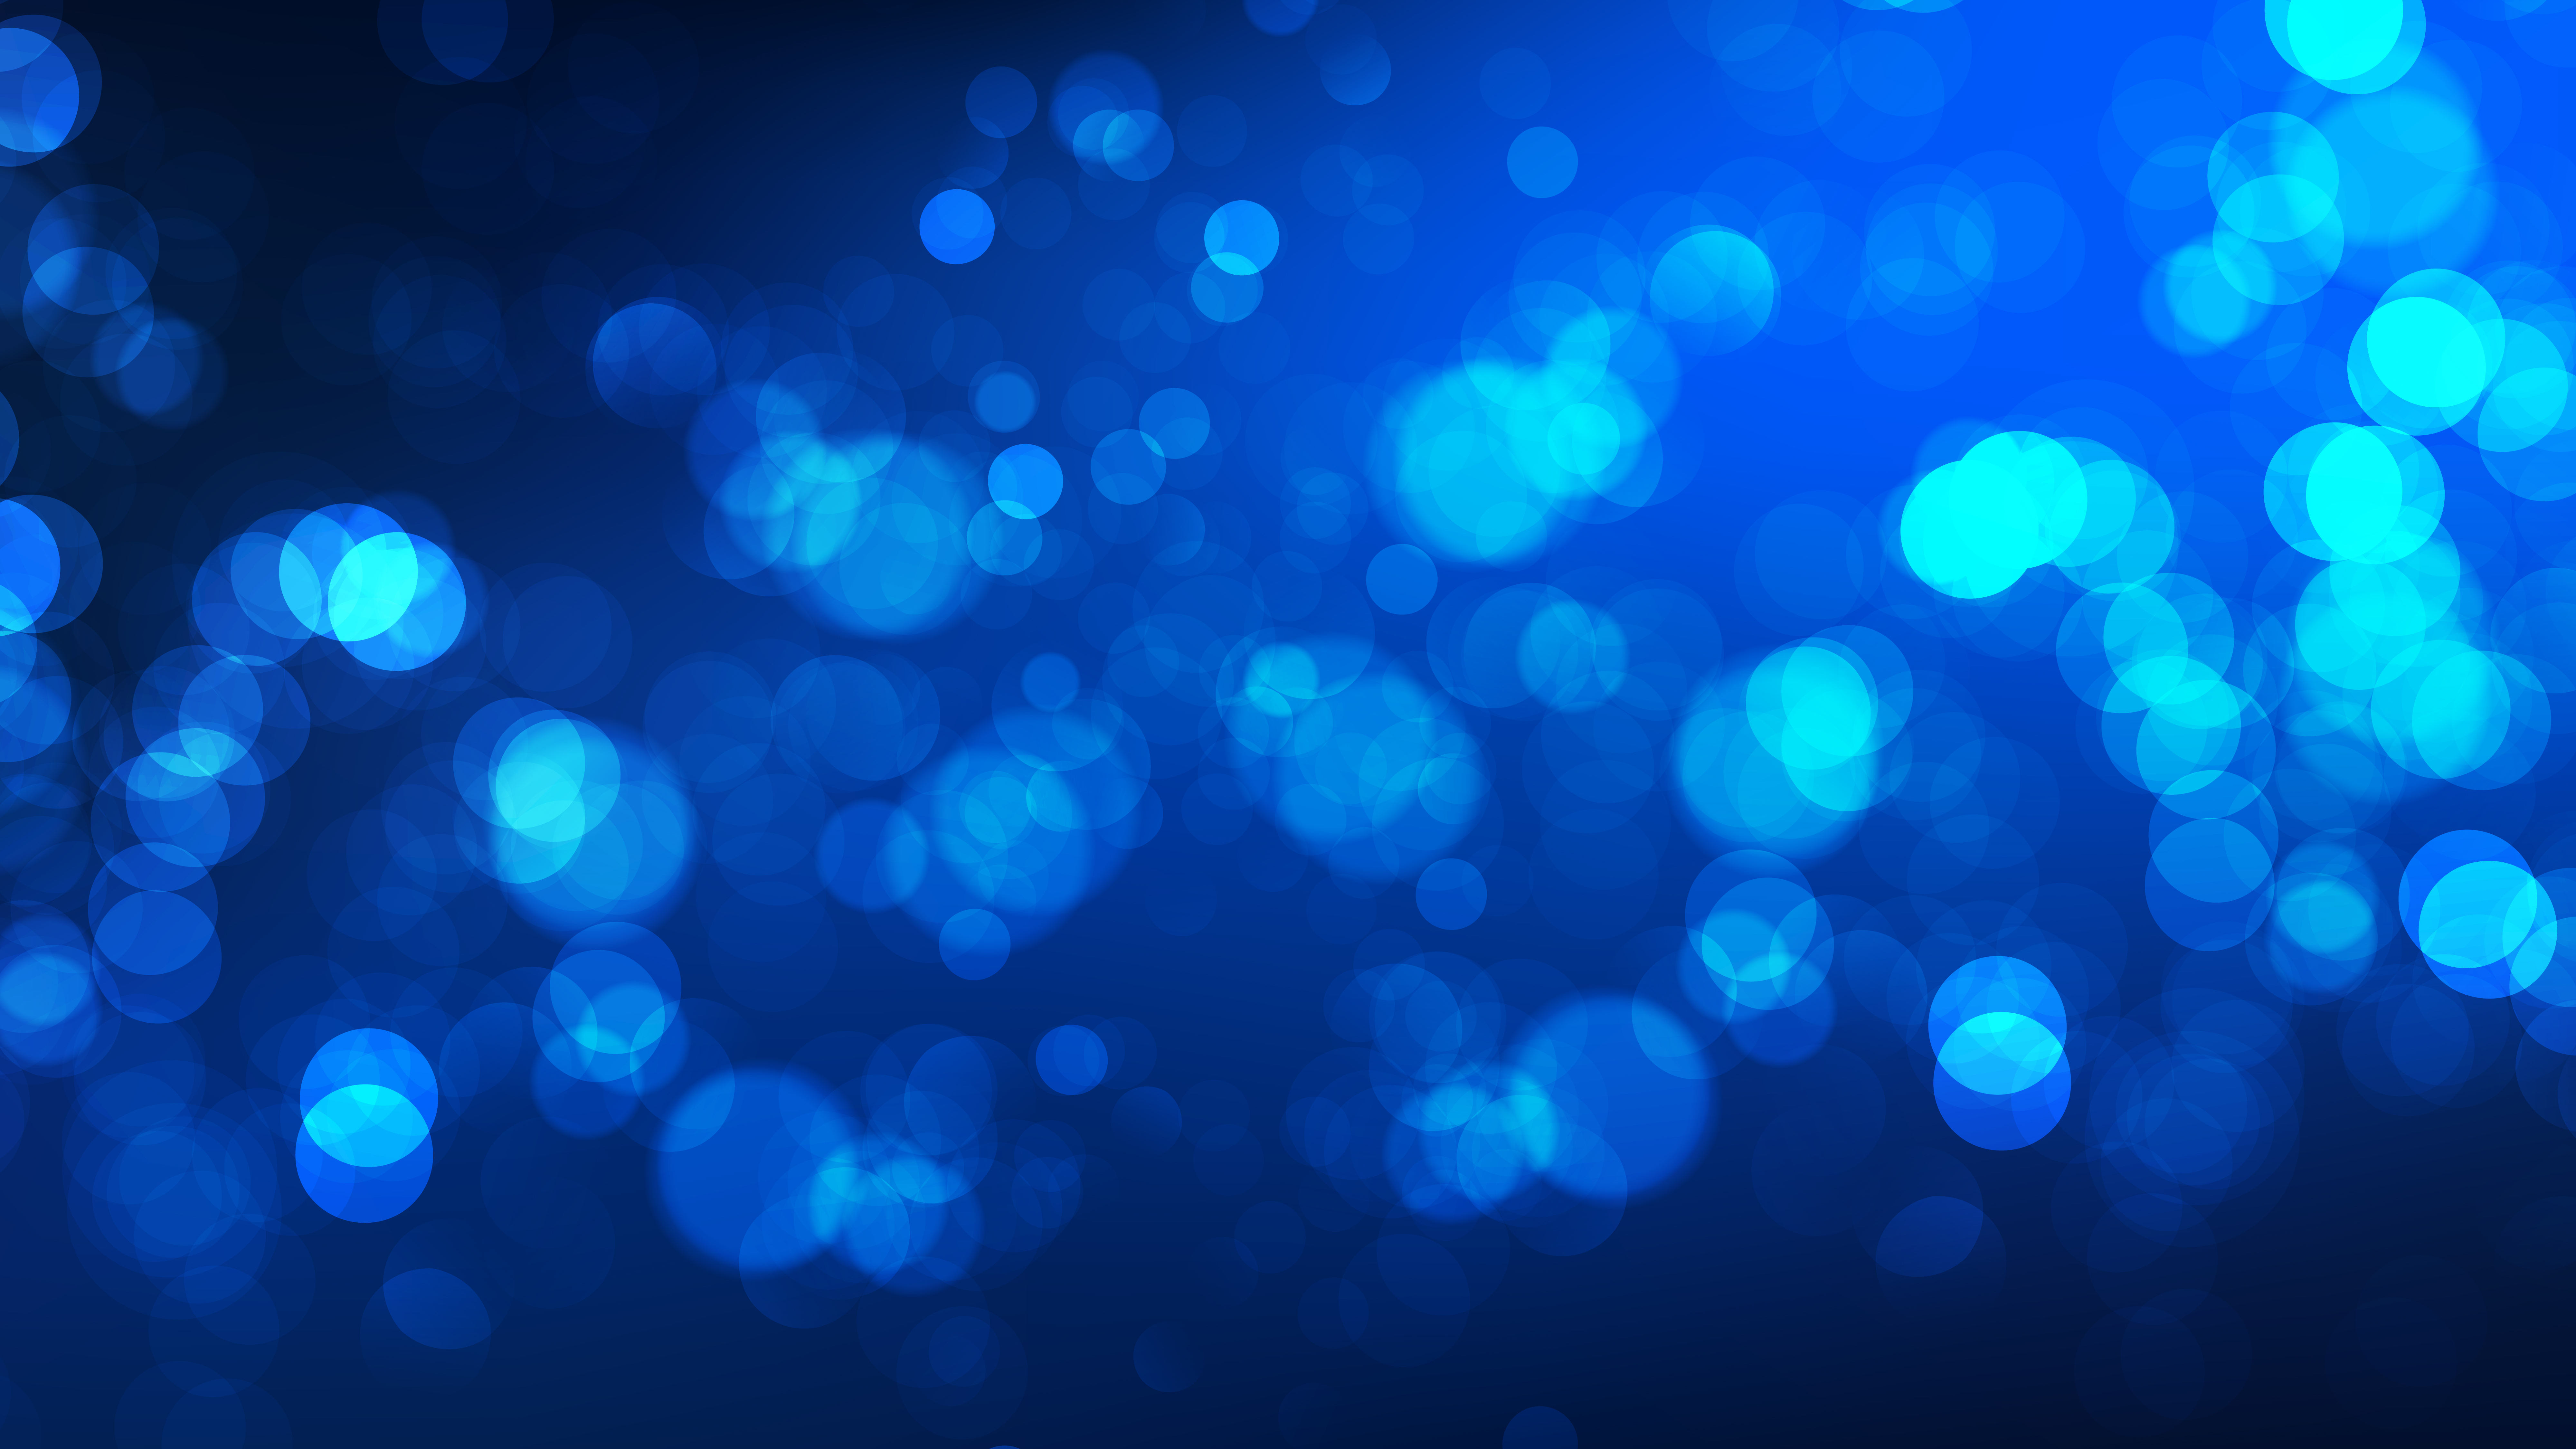 Free Black and Blue Lights Background Vector Illustration